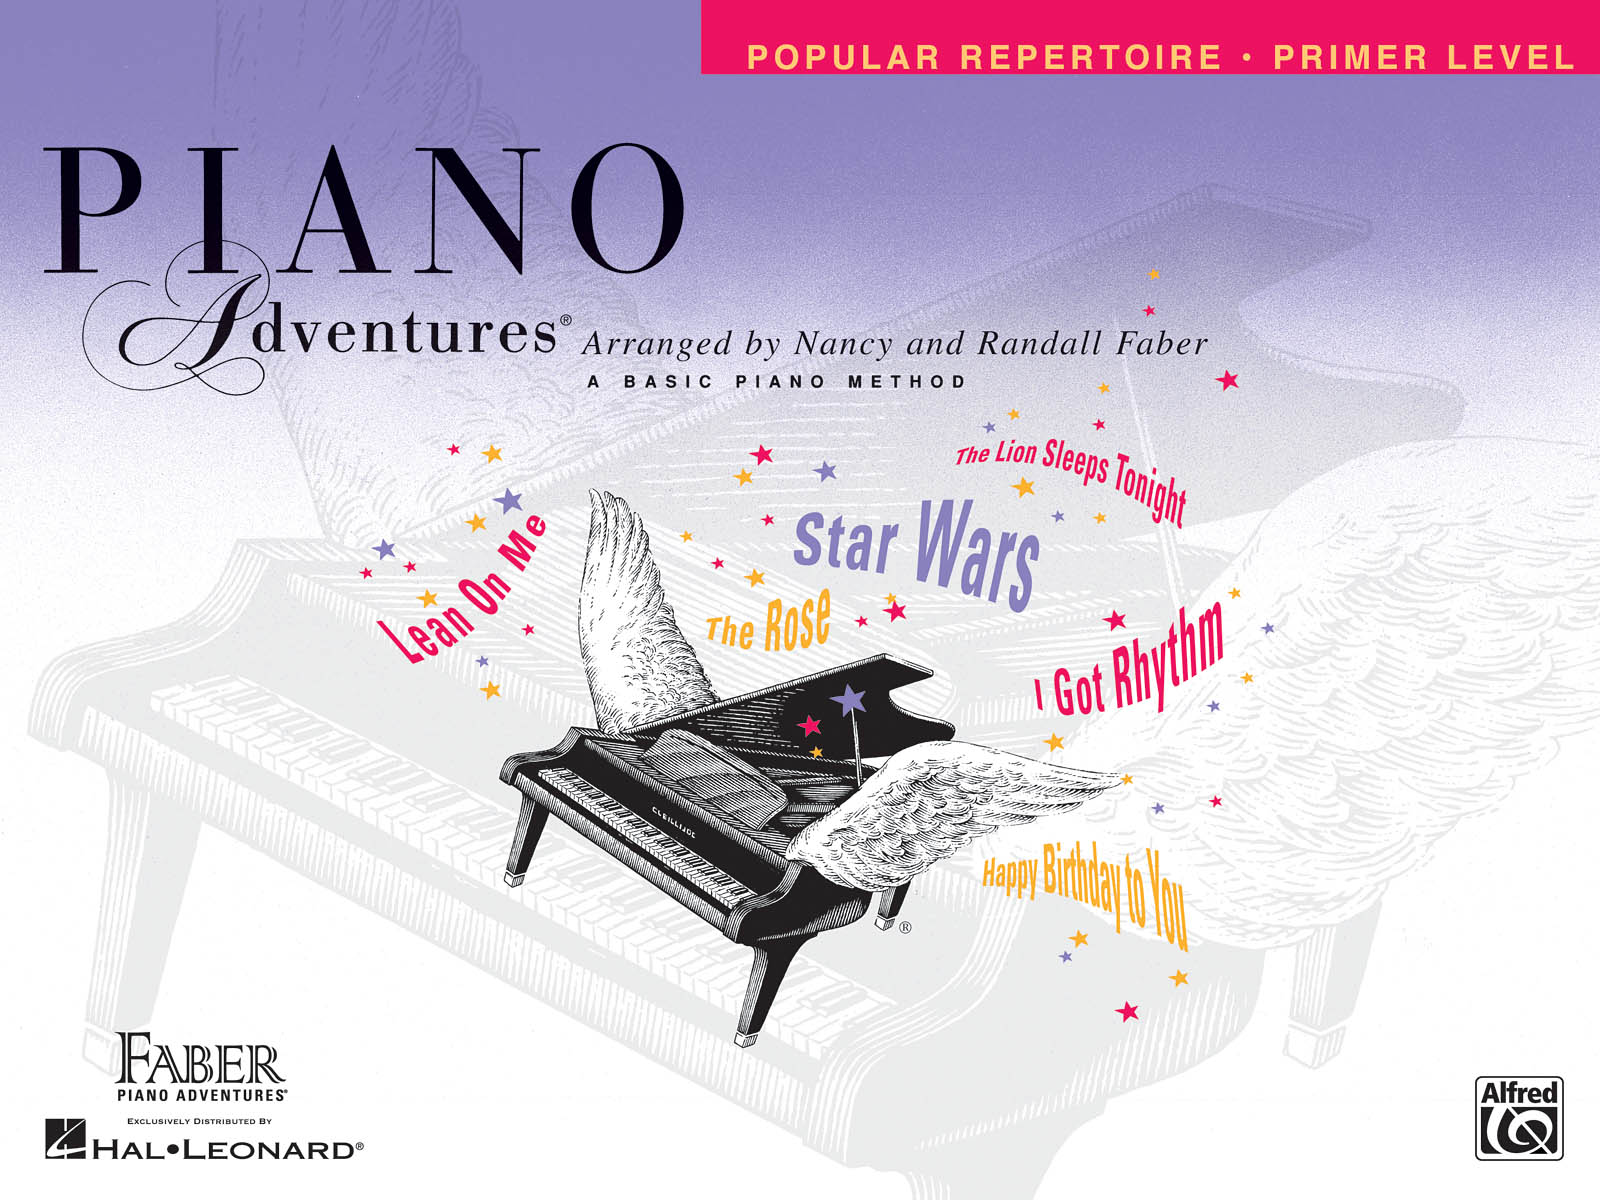 Piano Adventures Popular Repertoire Book - Primer Level - škola hry na klavír